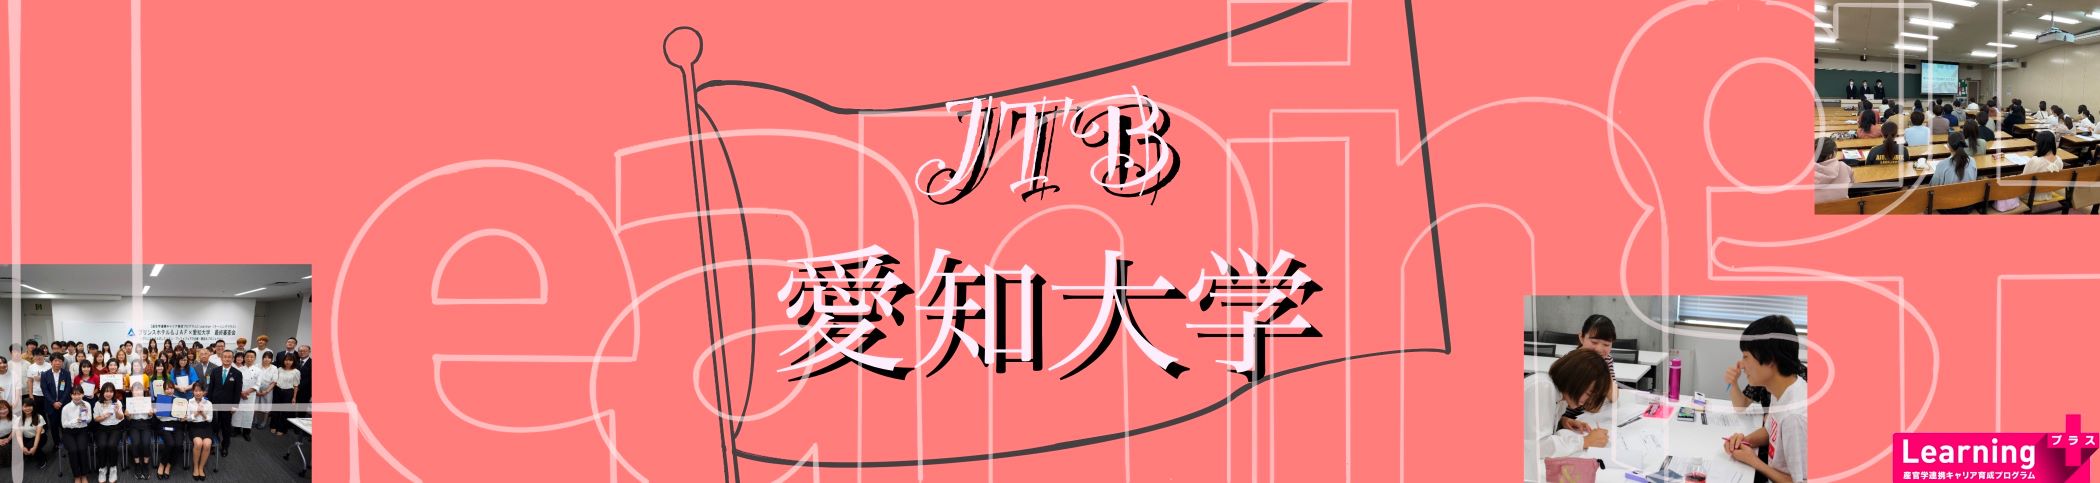 Learning＋ JTB